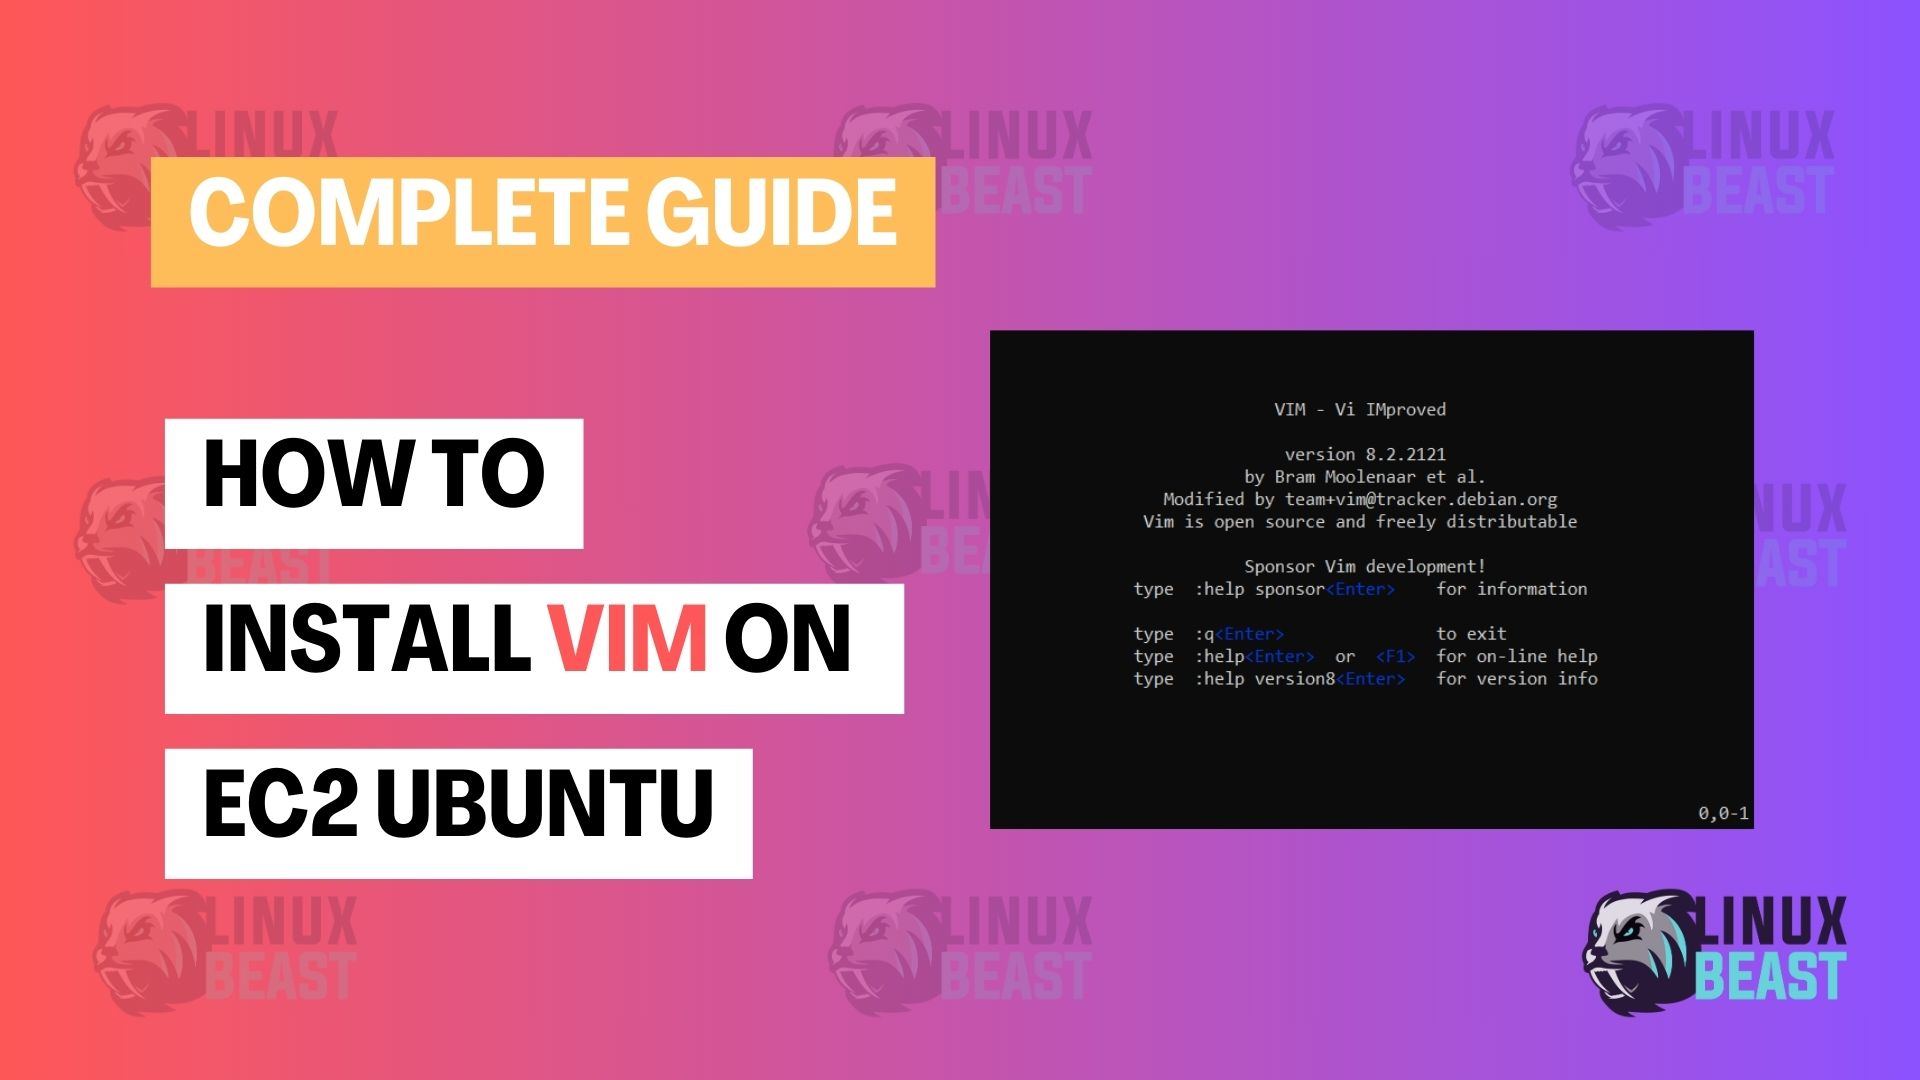 How to Install Vim on EC2 Ubuntu